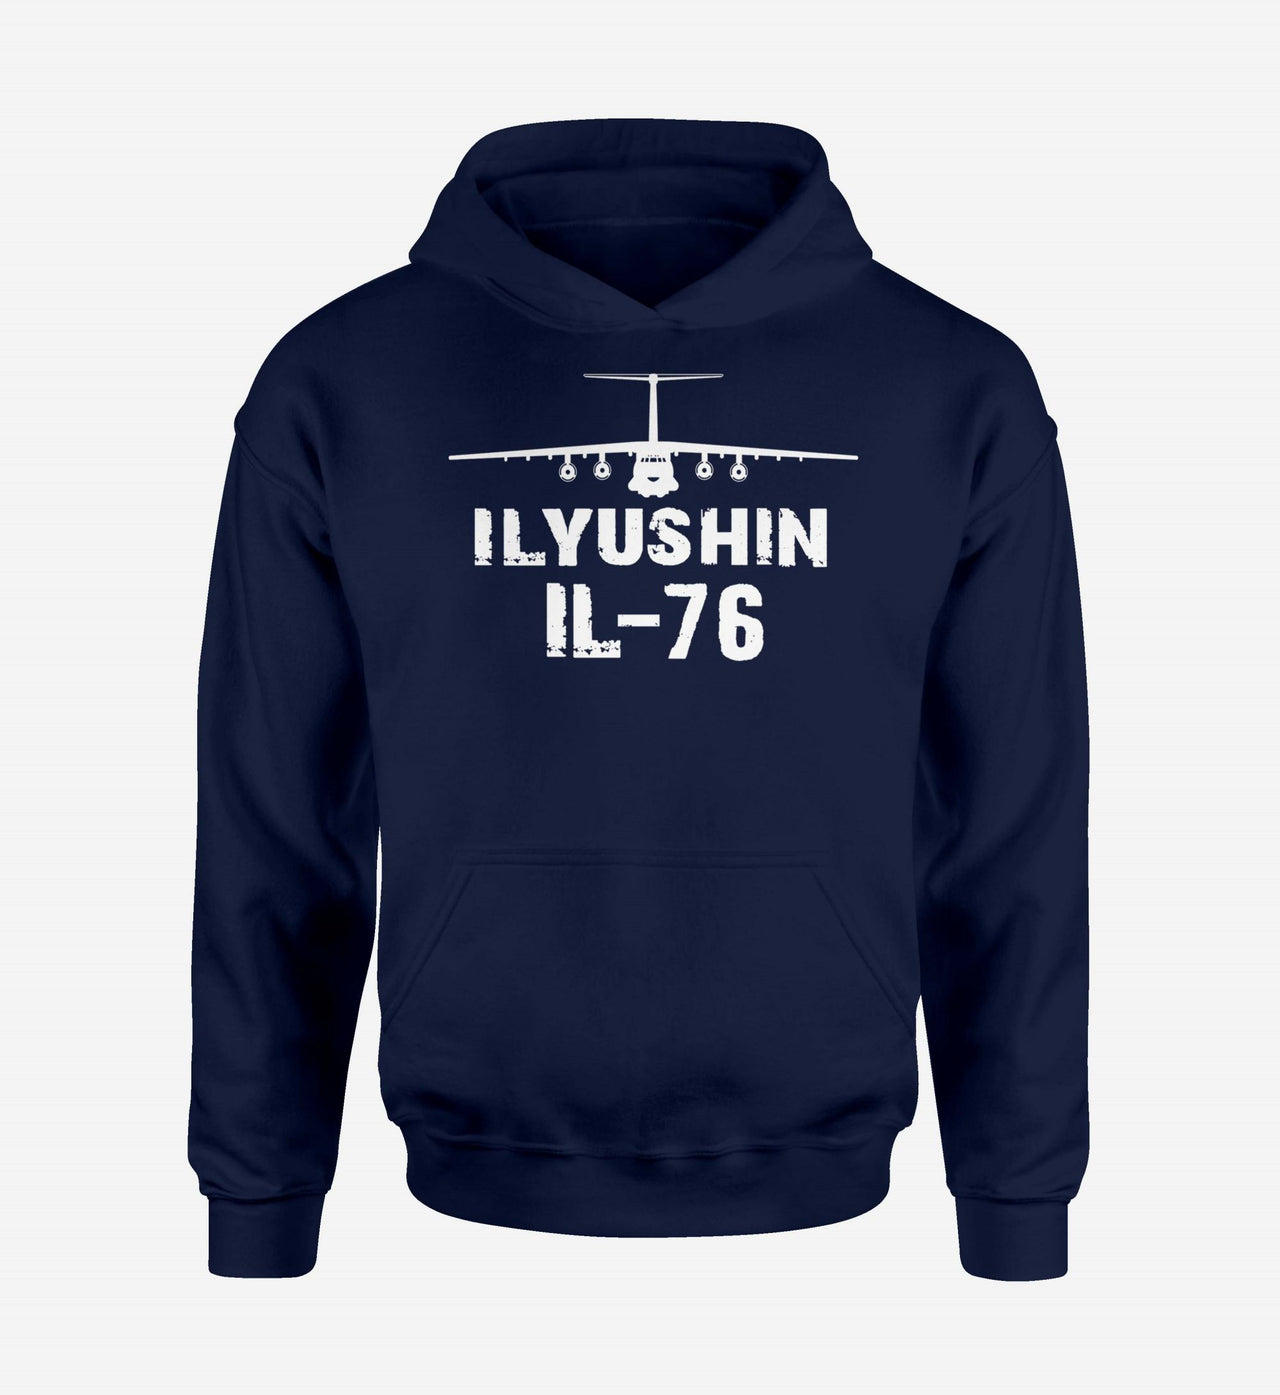 ILyushin IL-76 & Plane Designed Hoodies